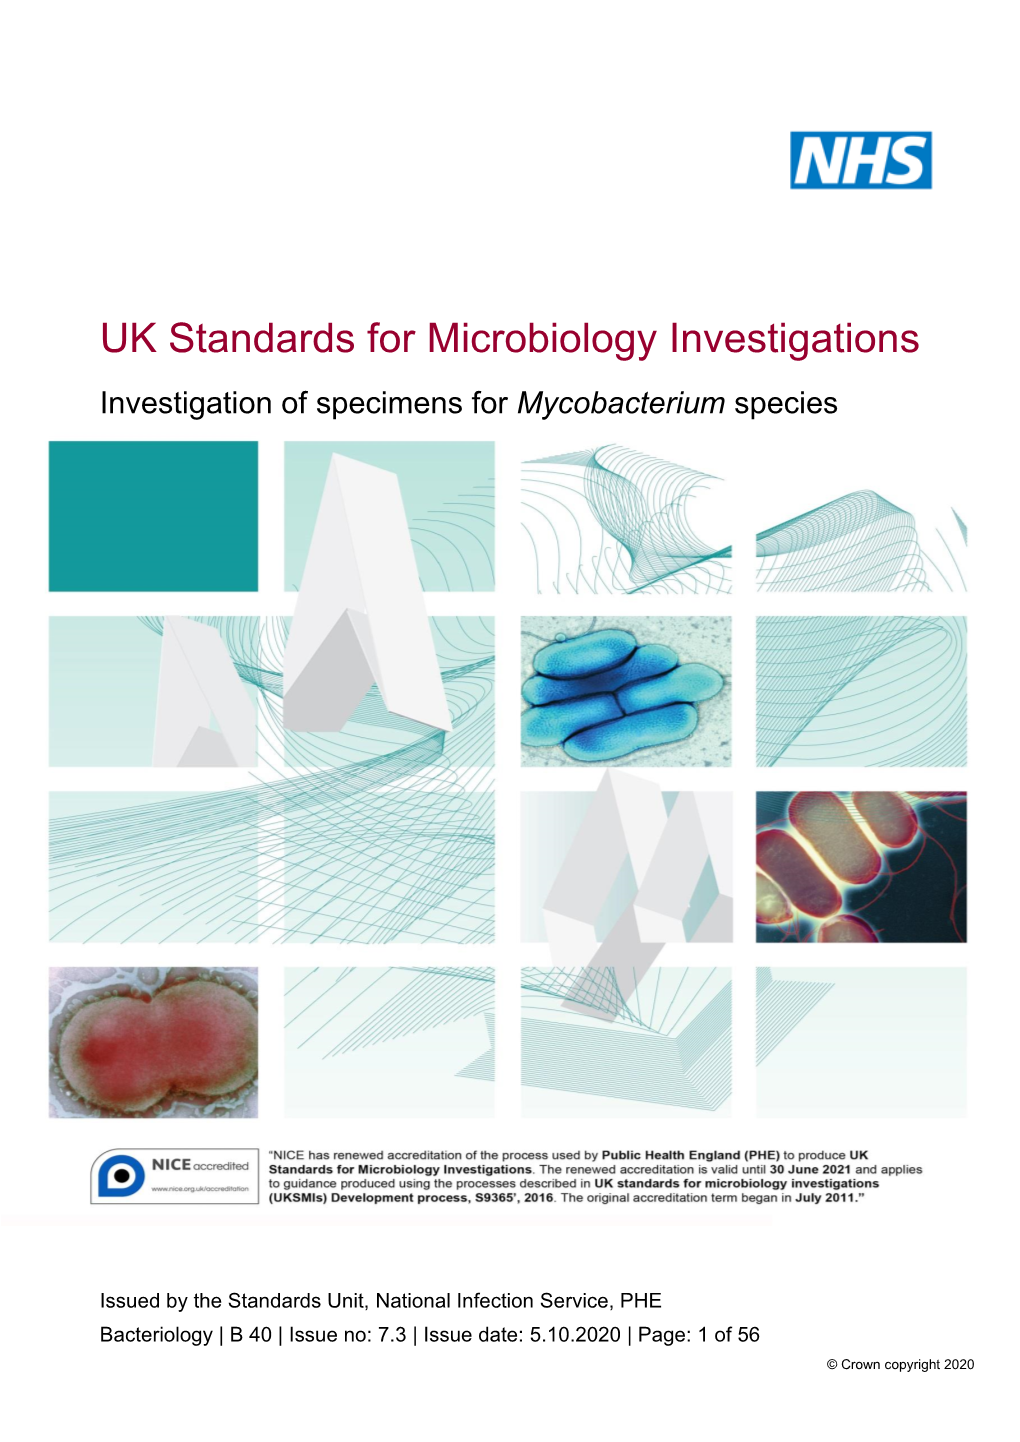 UK SMI: B 40 Investigation of Specimens for Mycobacterium Species